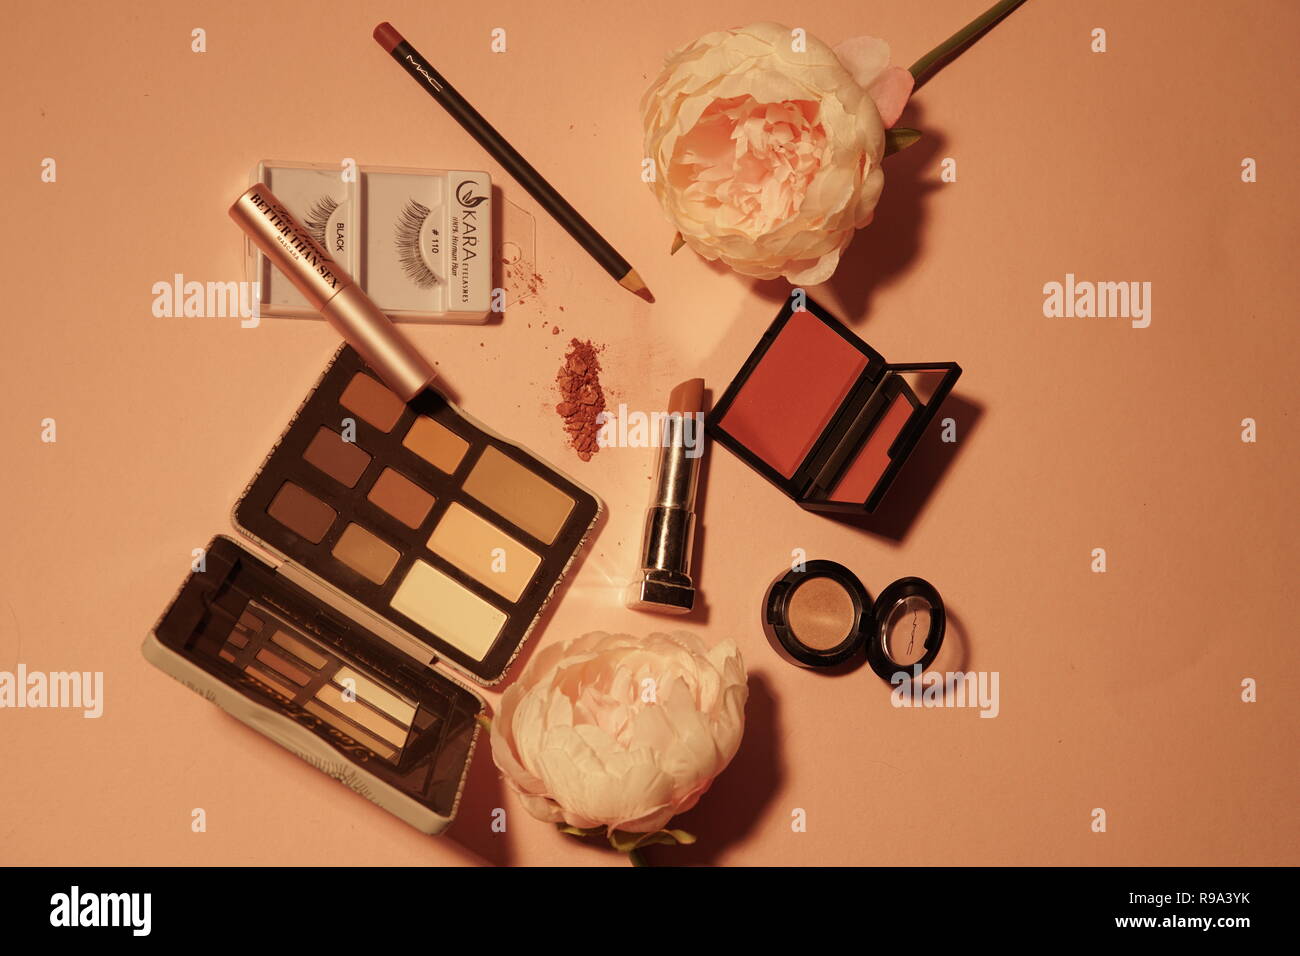 Makeup layout background Stock Photo